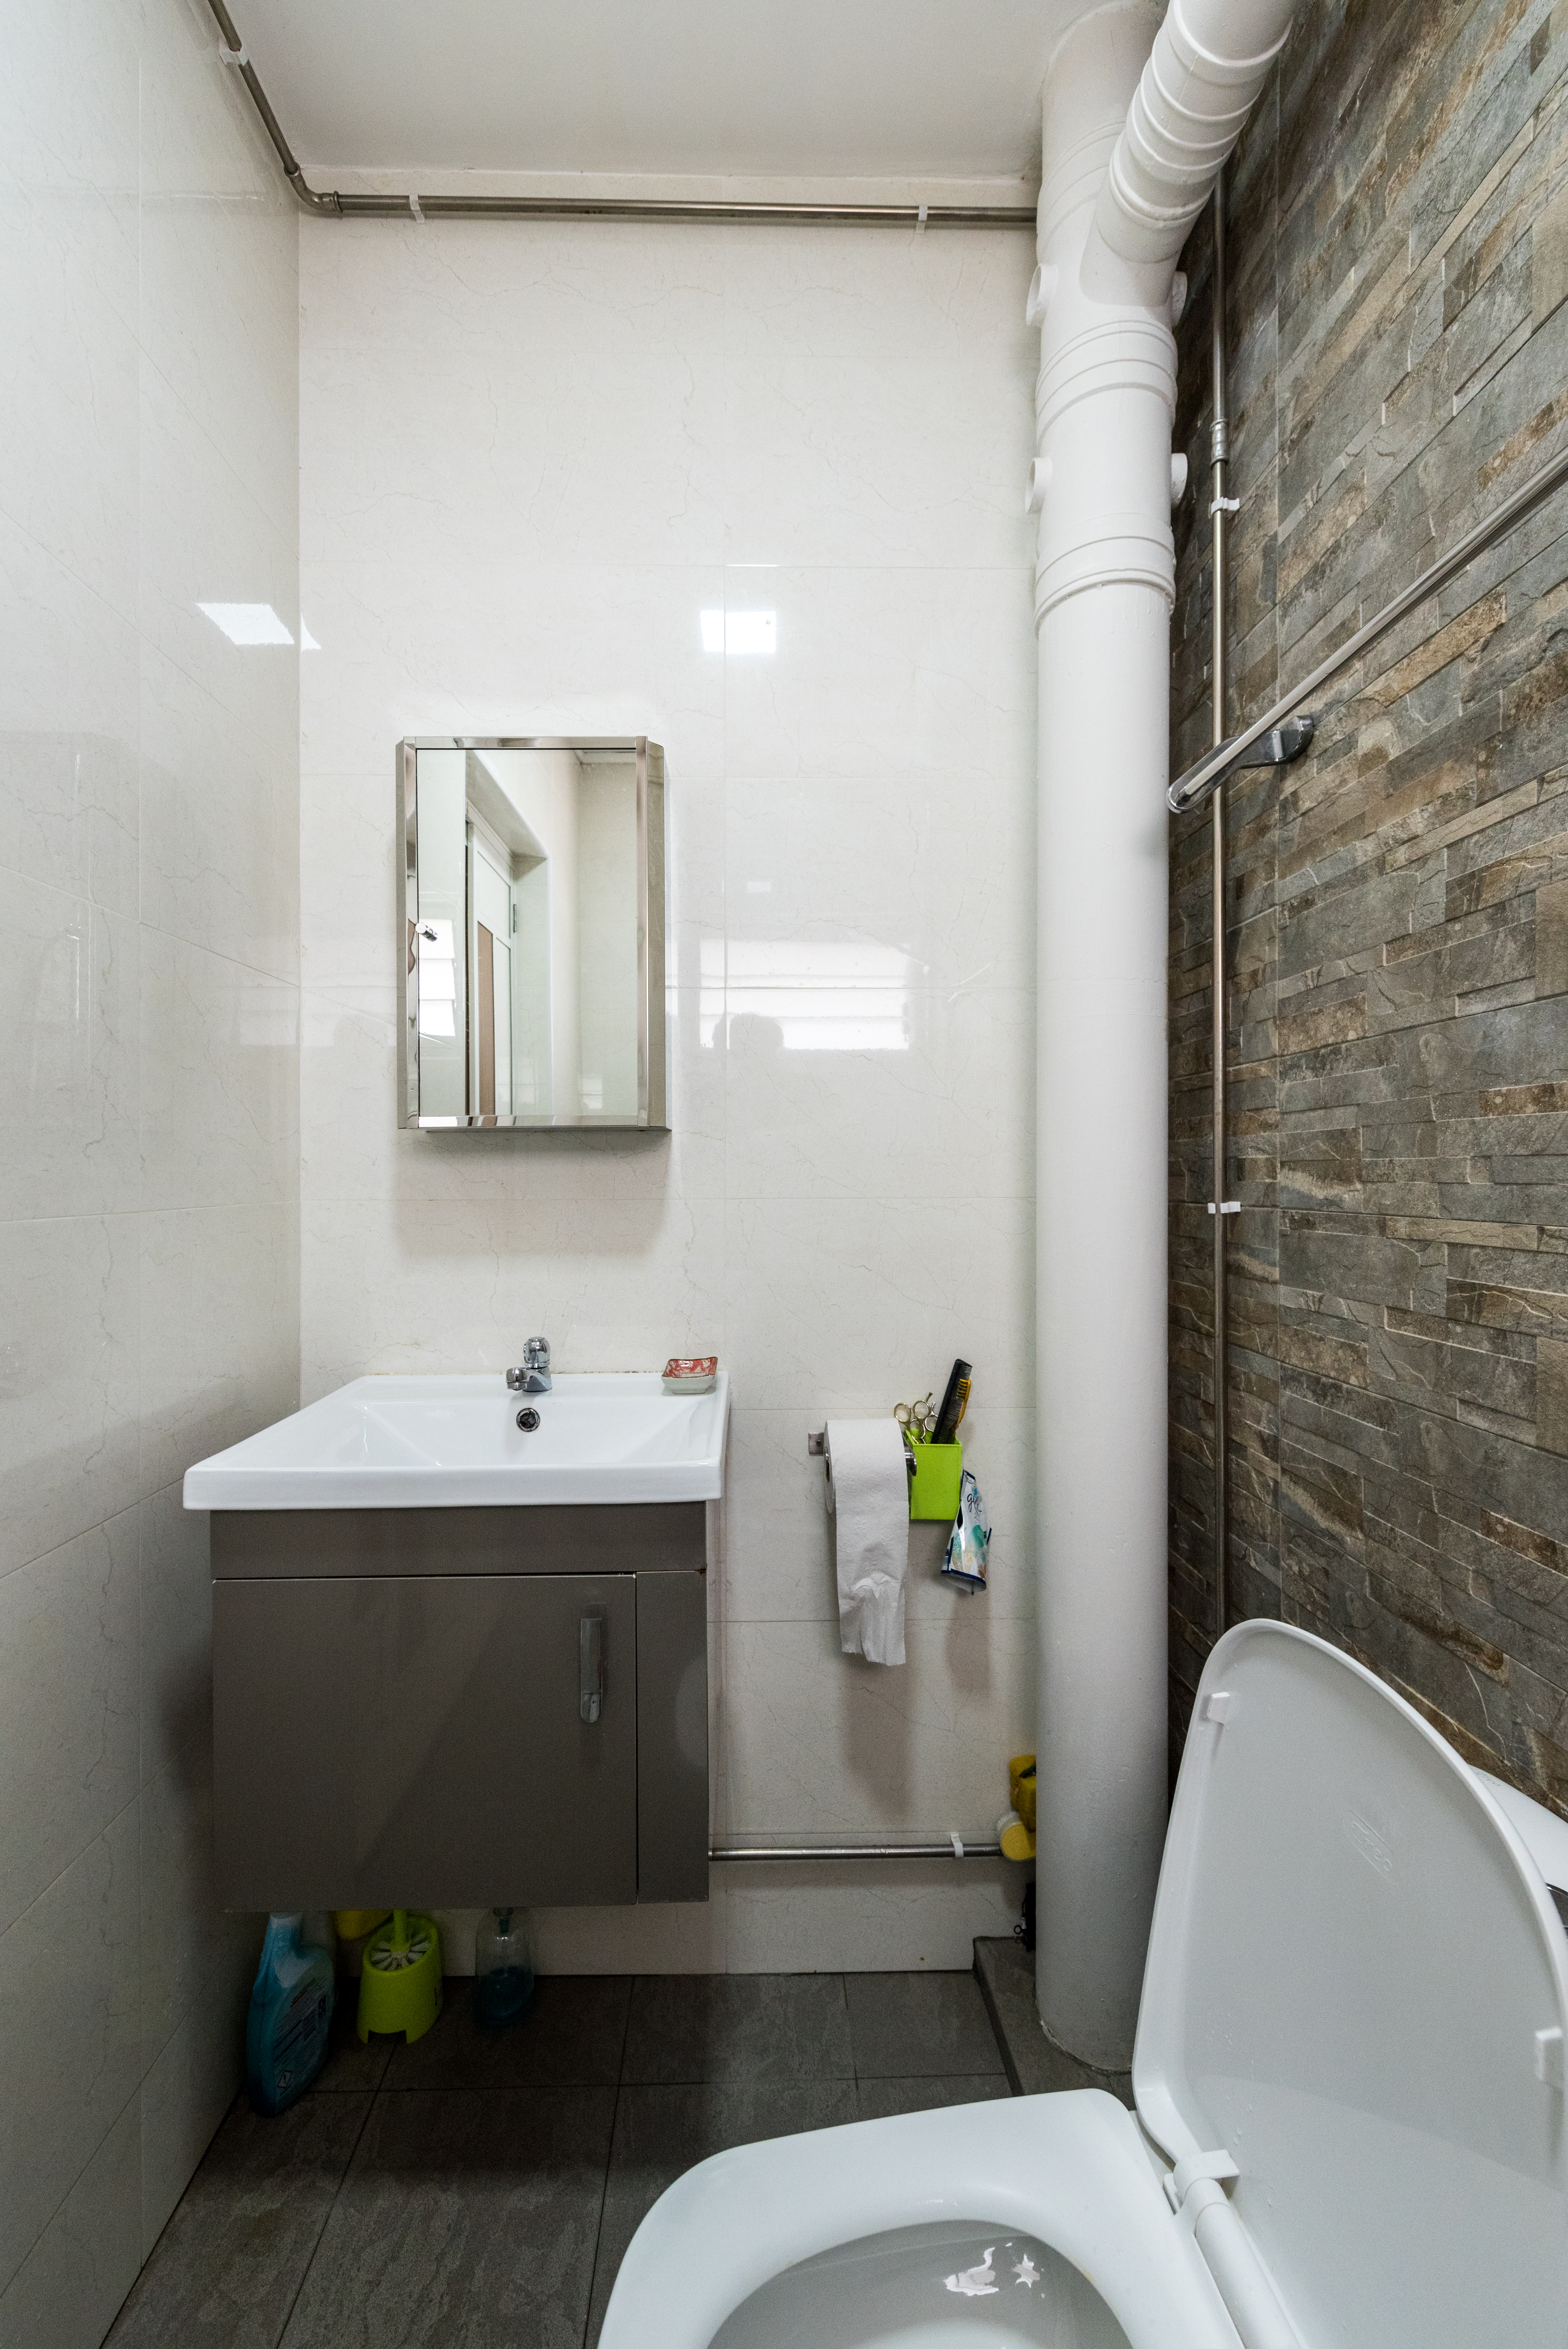 Contemporary, Country, Modern Design - Bathroom - HDB Executive Apartment - Design by Stylerider Pte Ltd